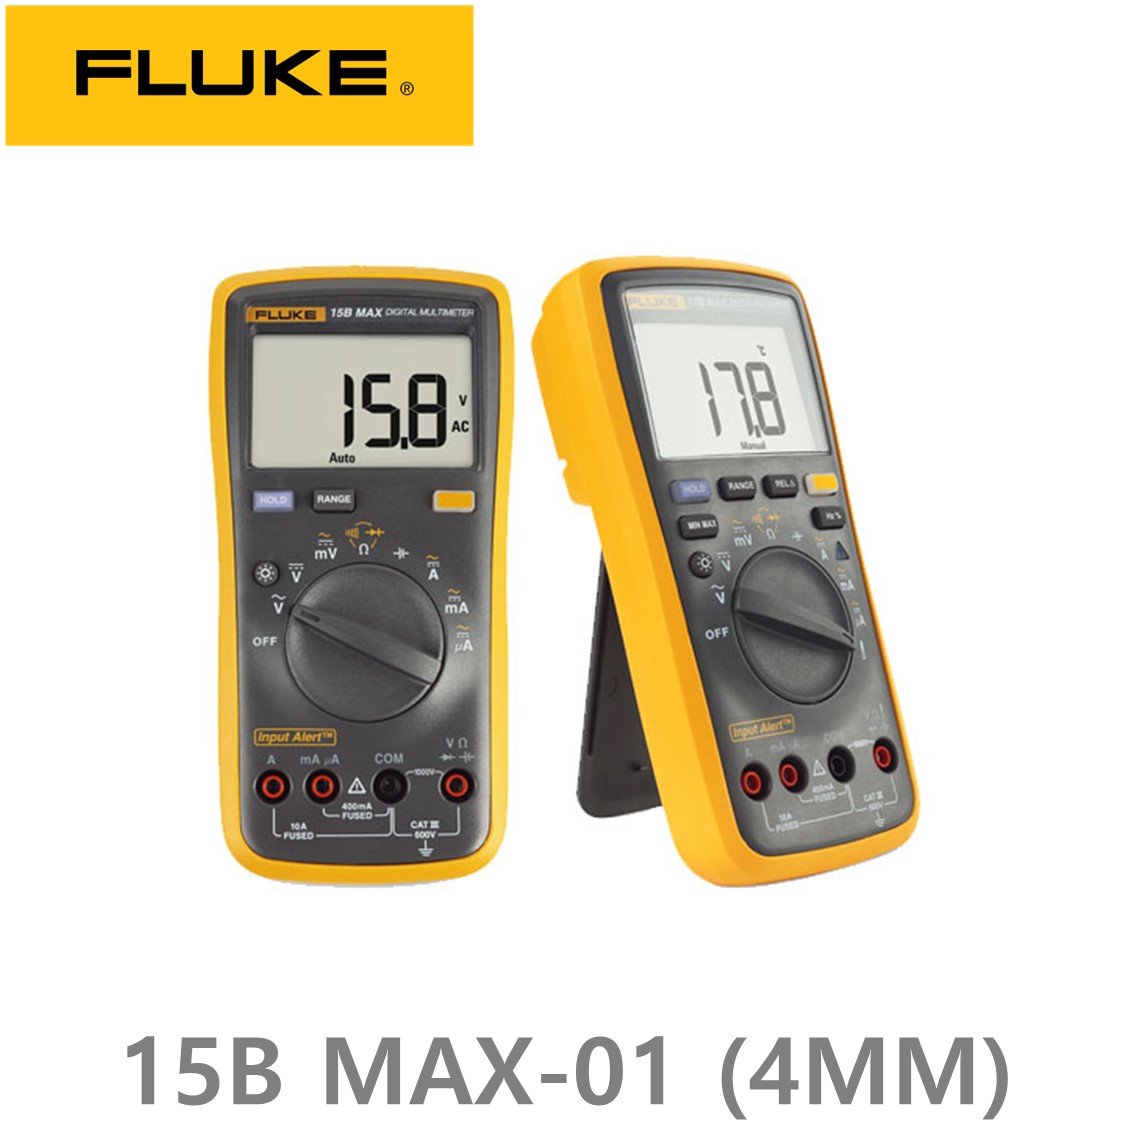 [ FLUKE 15B MAX-01 ] 정품 플루크 15B MAX-01 멀티미터, 테스터기, 4MM 테스트리드